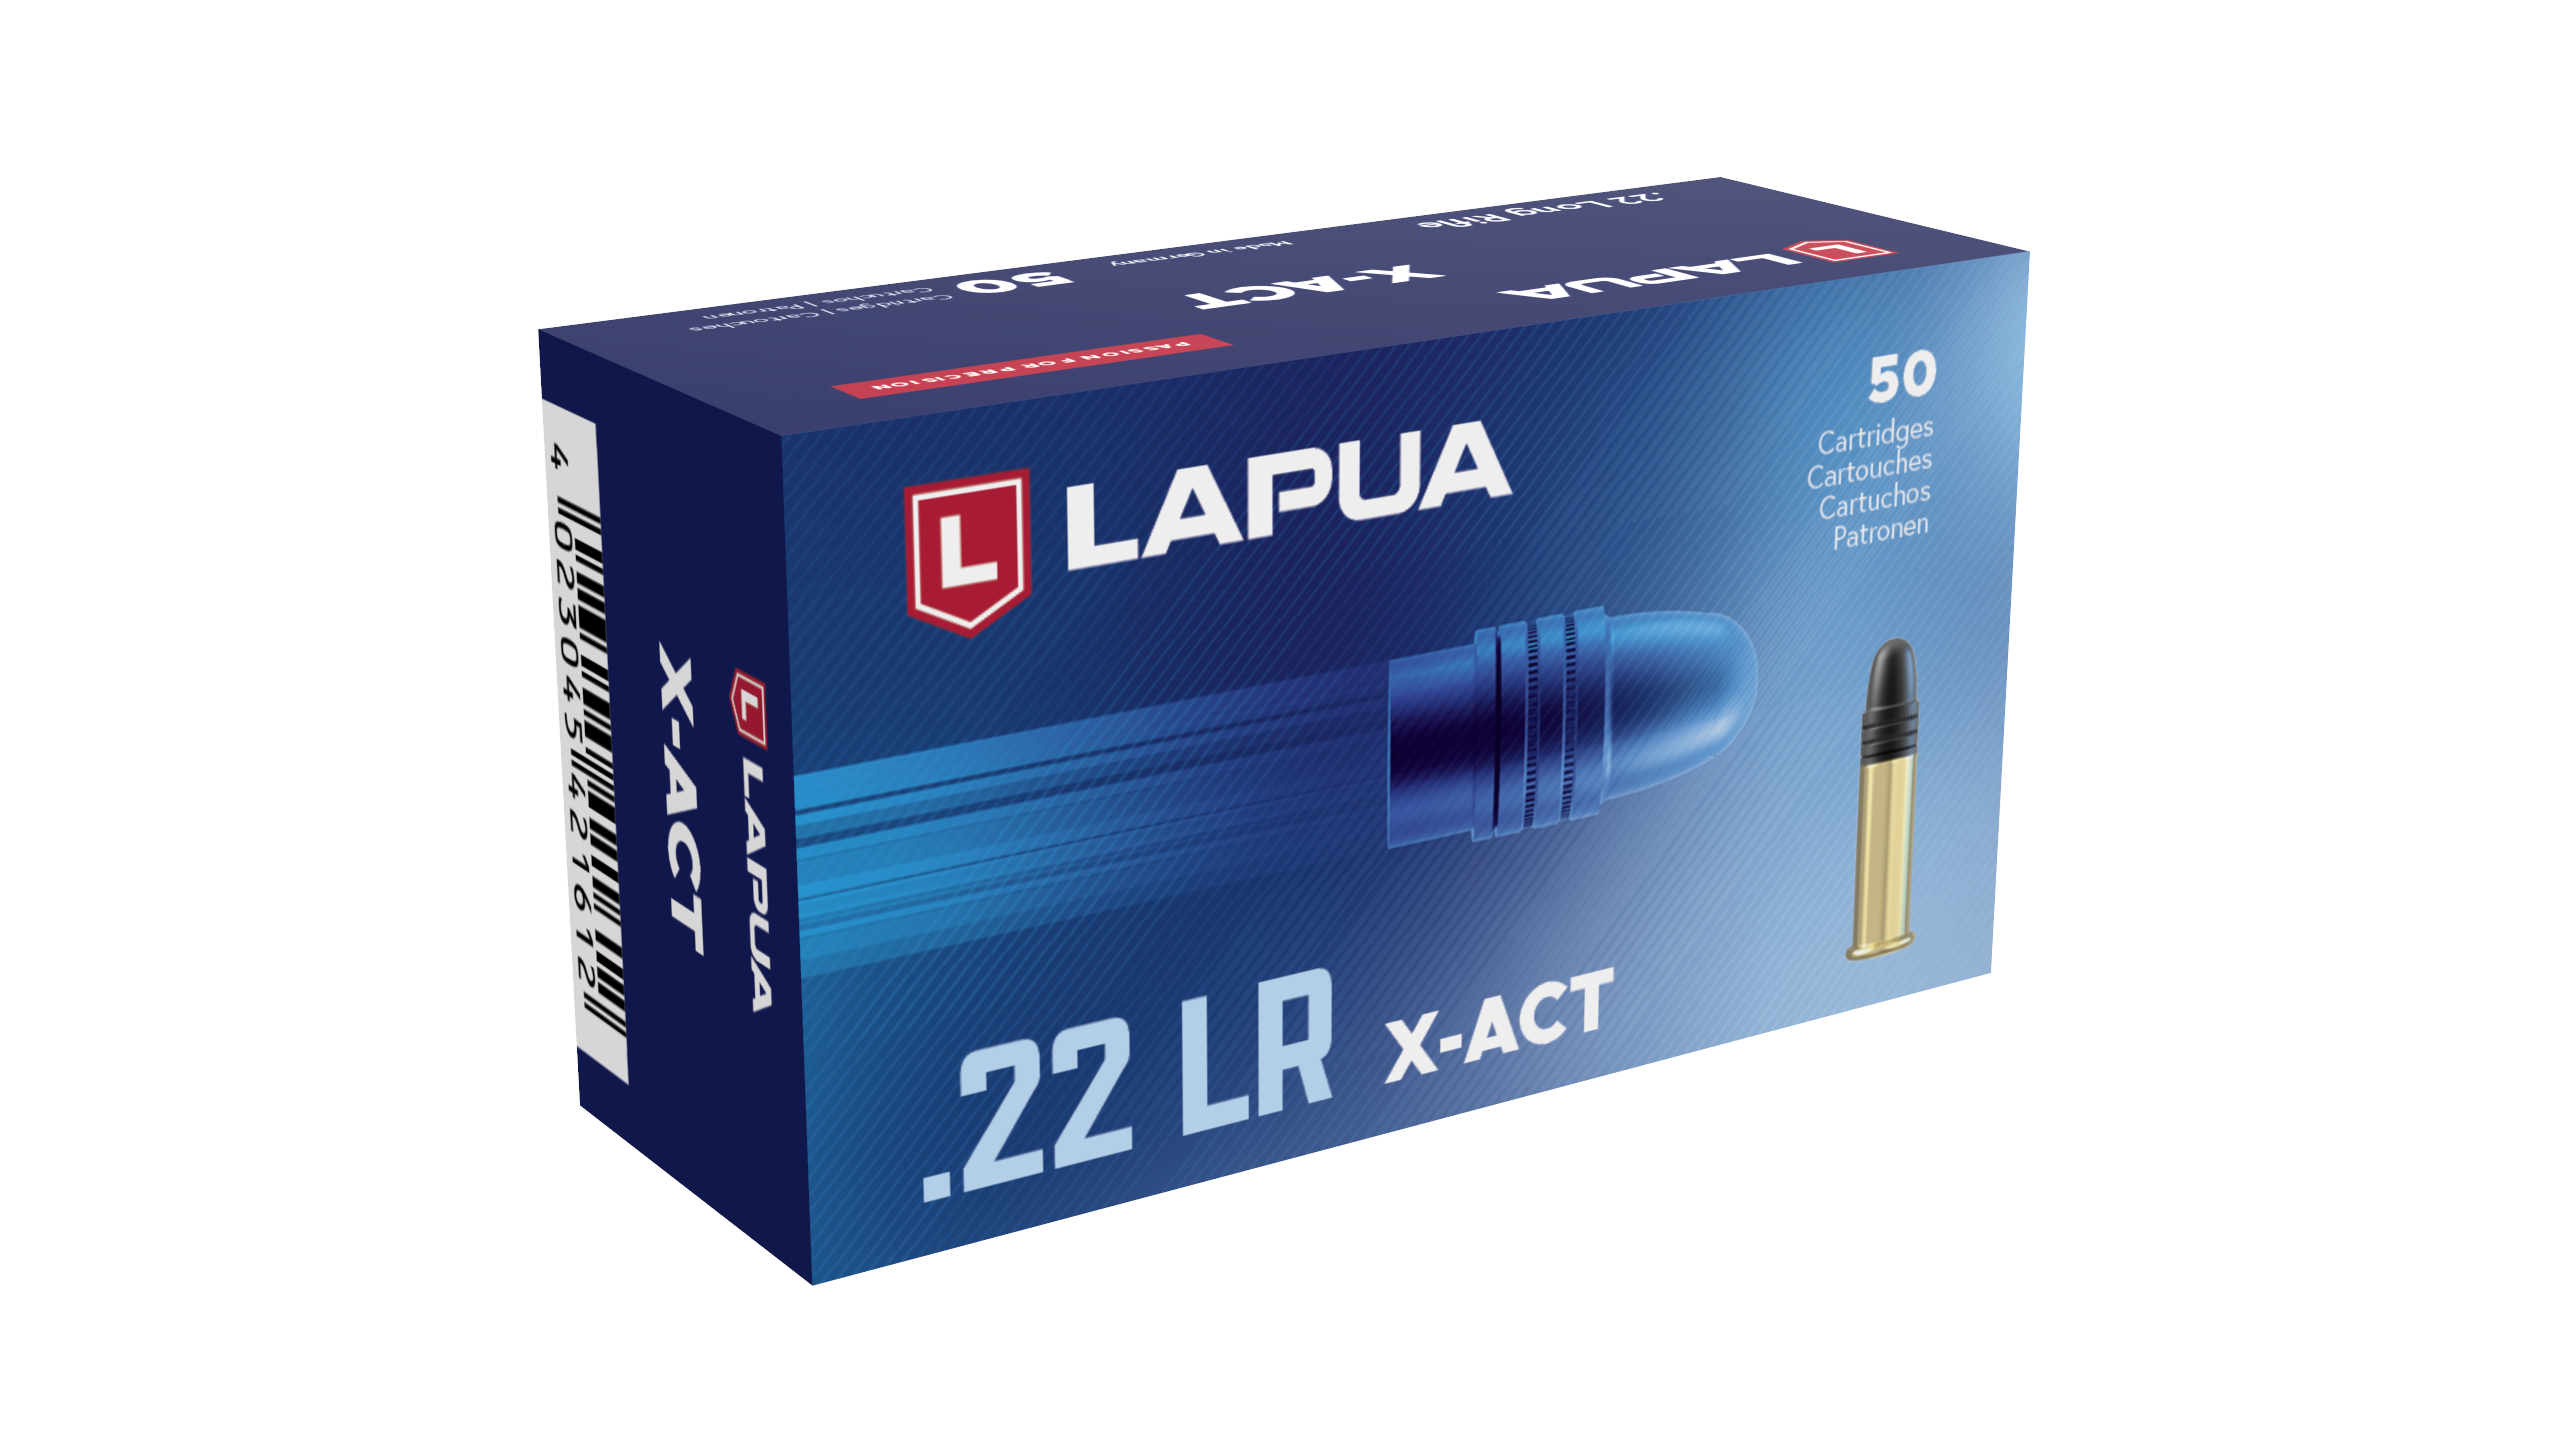 Lapua X-Act .22LR